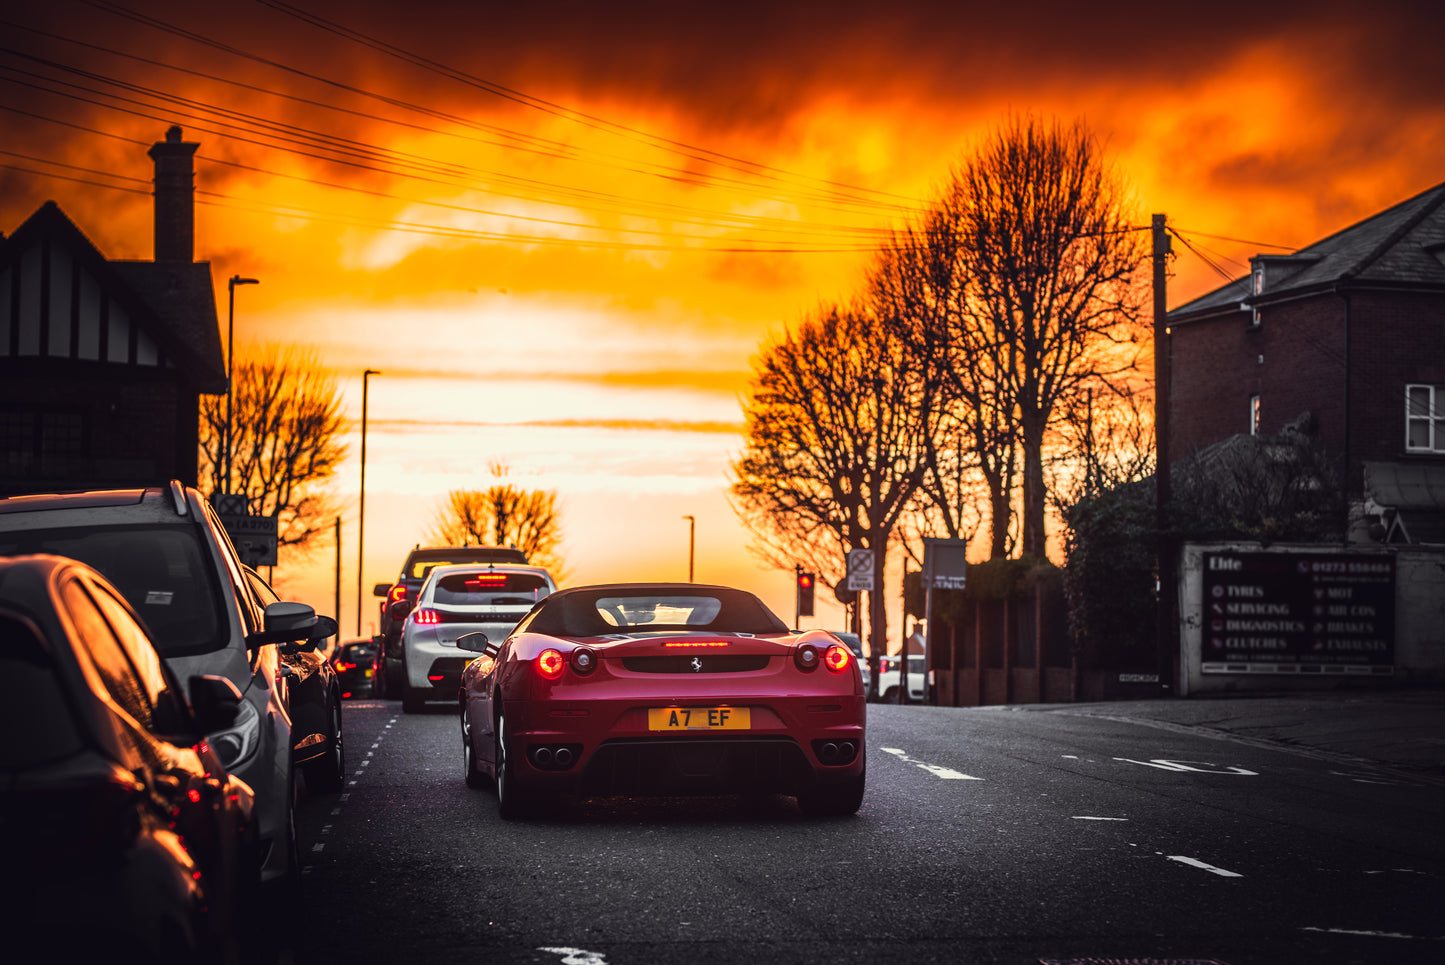 Ferrari F430 F1 Spider on apocalyptic sunset background. Automotive Photography, classic car, vintage vehicle, car photography, art print, wall decor.